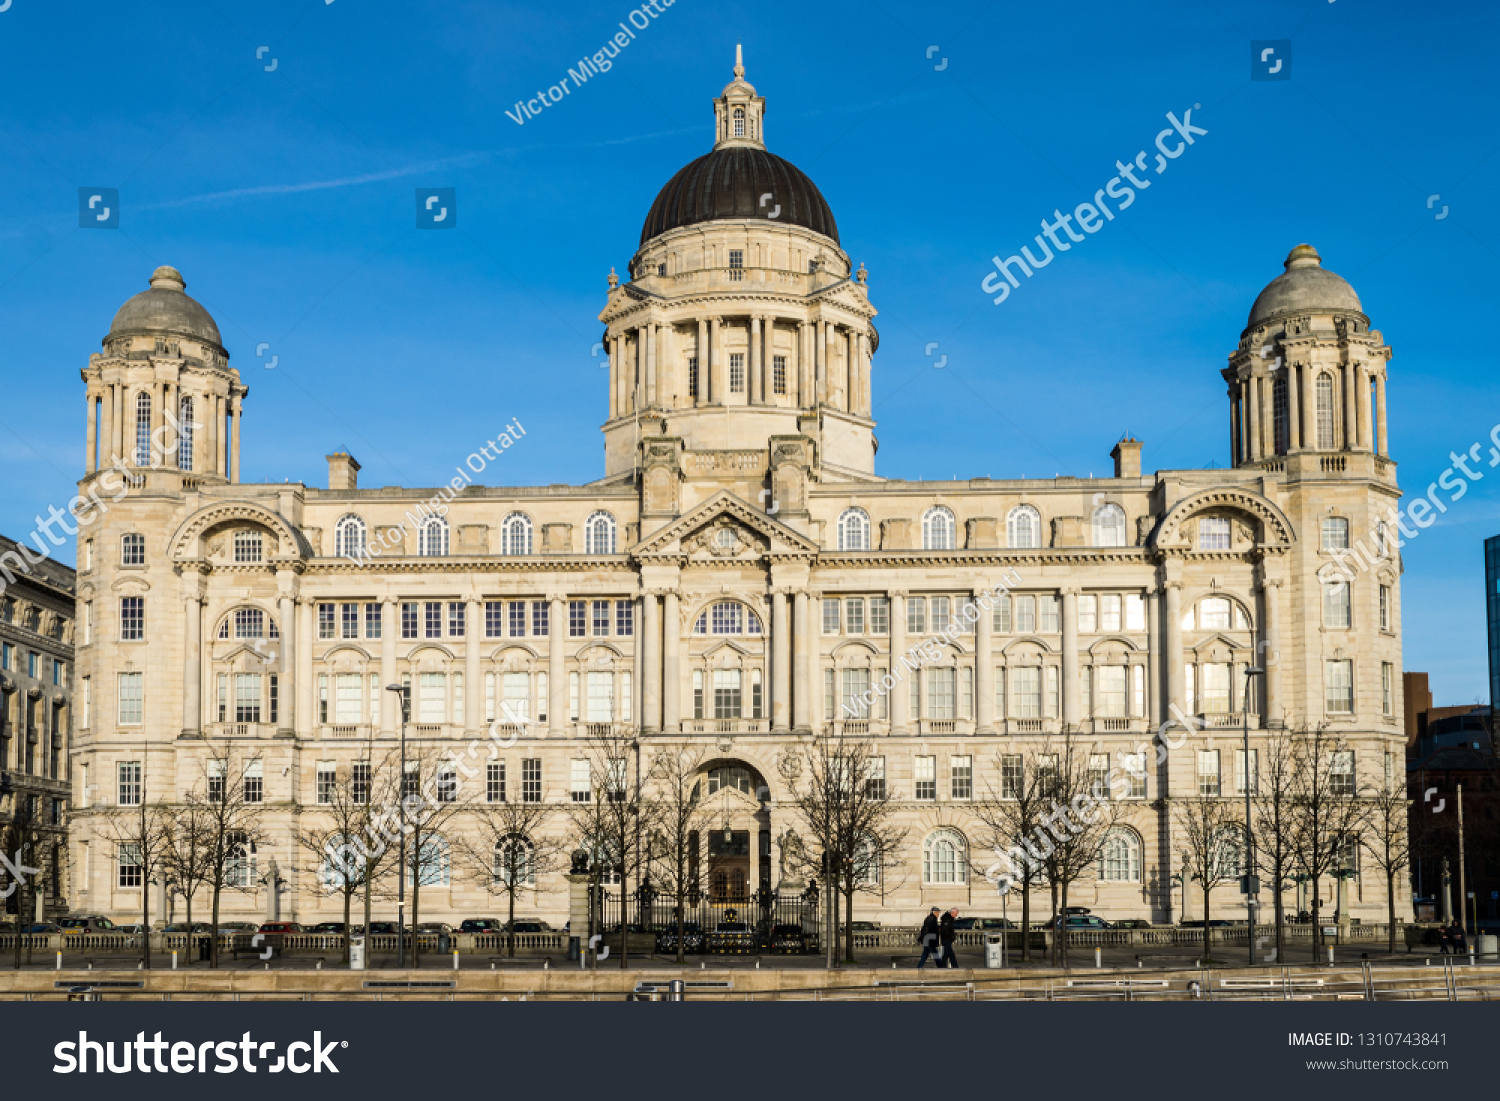 Building Landmark of Liverpool #1310743841